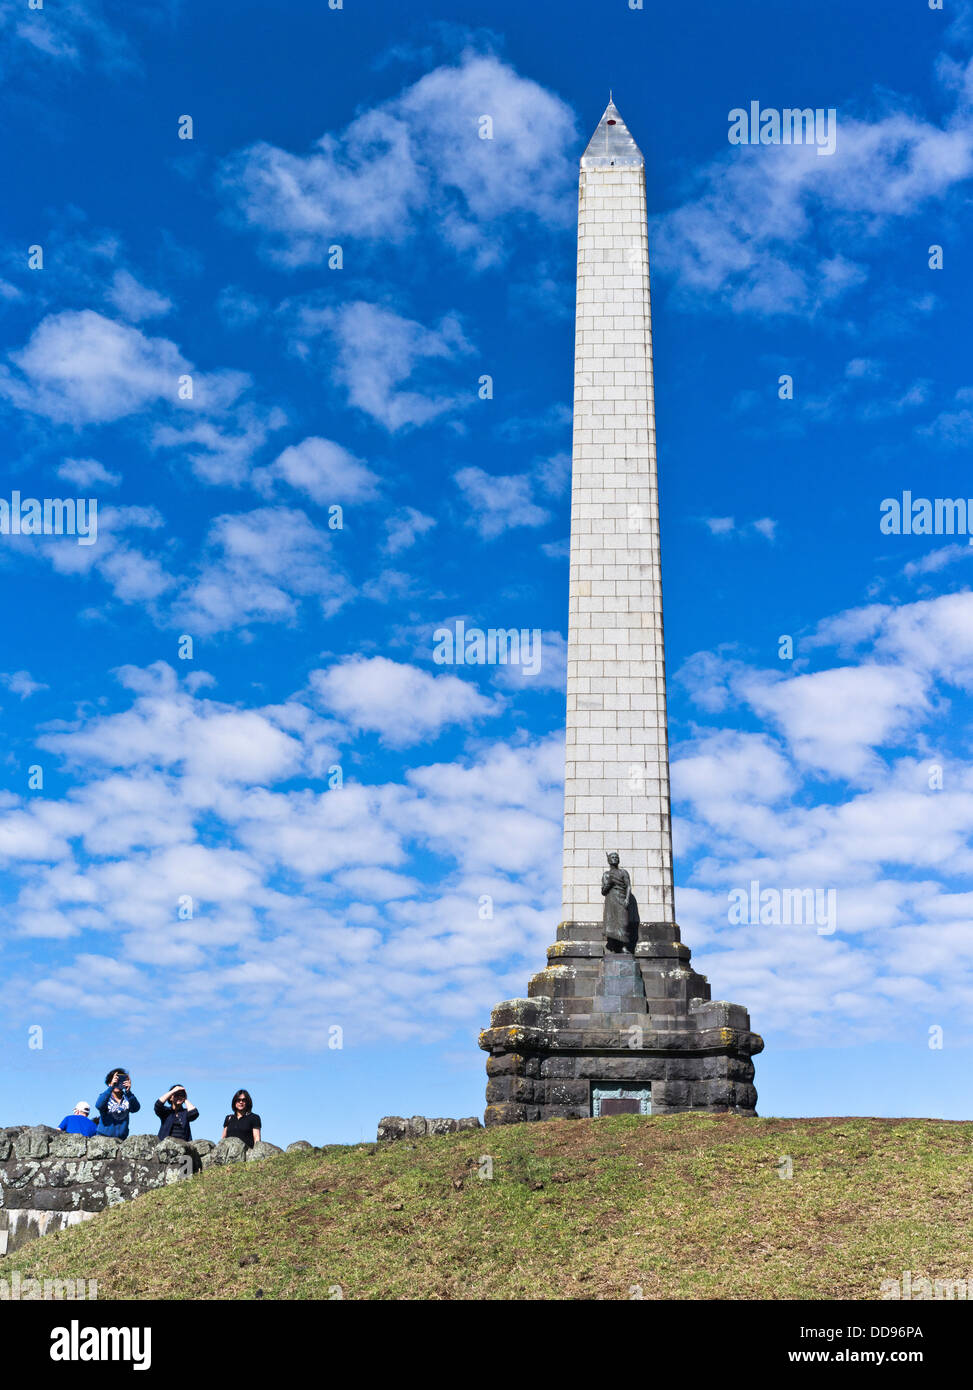 dh One Tree Hill Maungakiekie AUCKLAND NEUSEELAND Touristen Maori memorial Obelisk Sehenswürdigkeiten Stockfoto